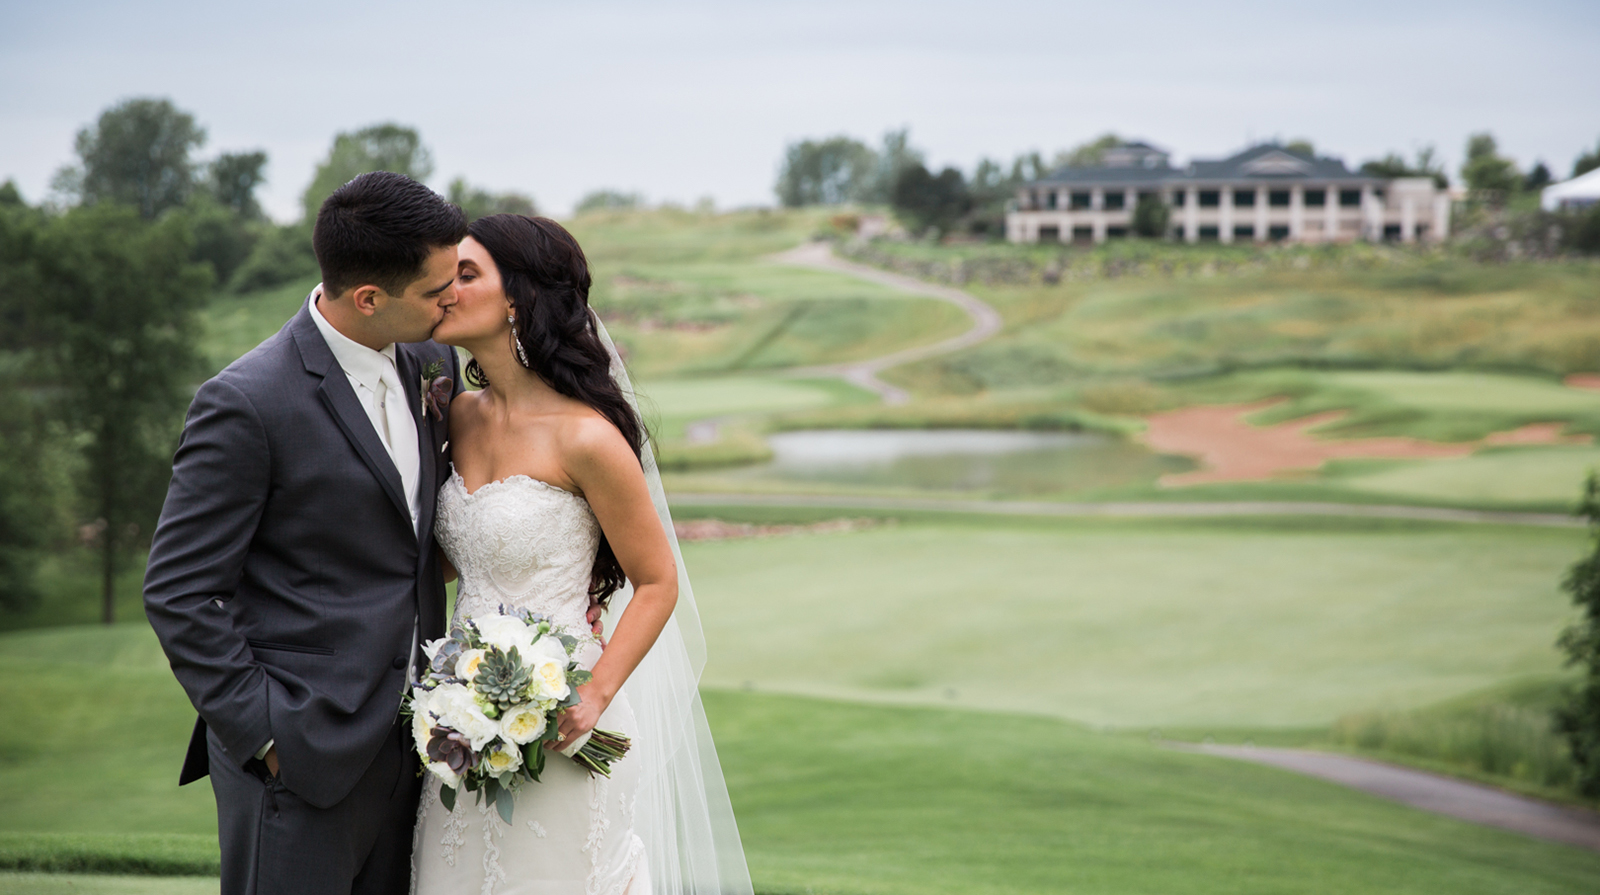 The Top 7 Wedding Venues in Green Bay Wisconsin